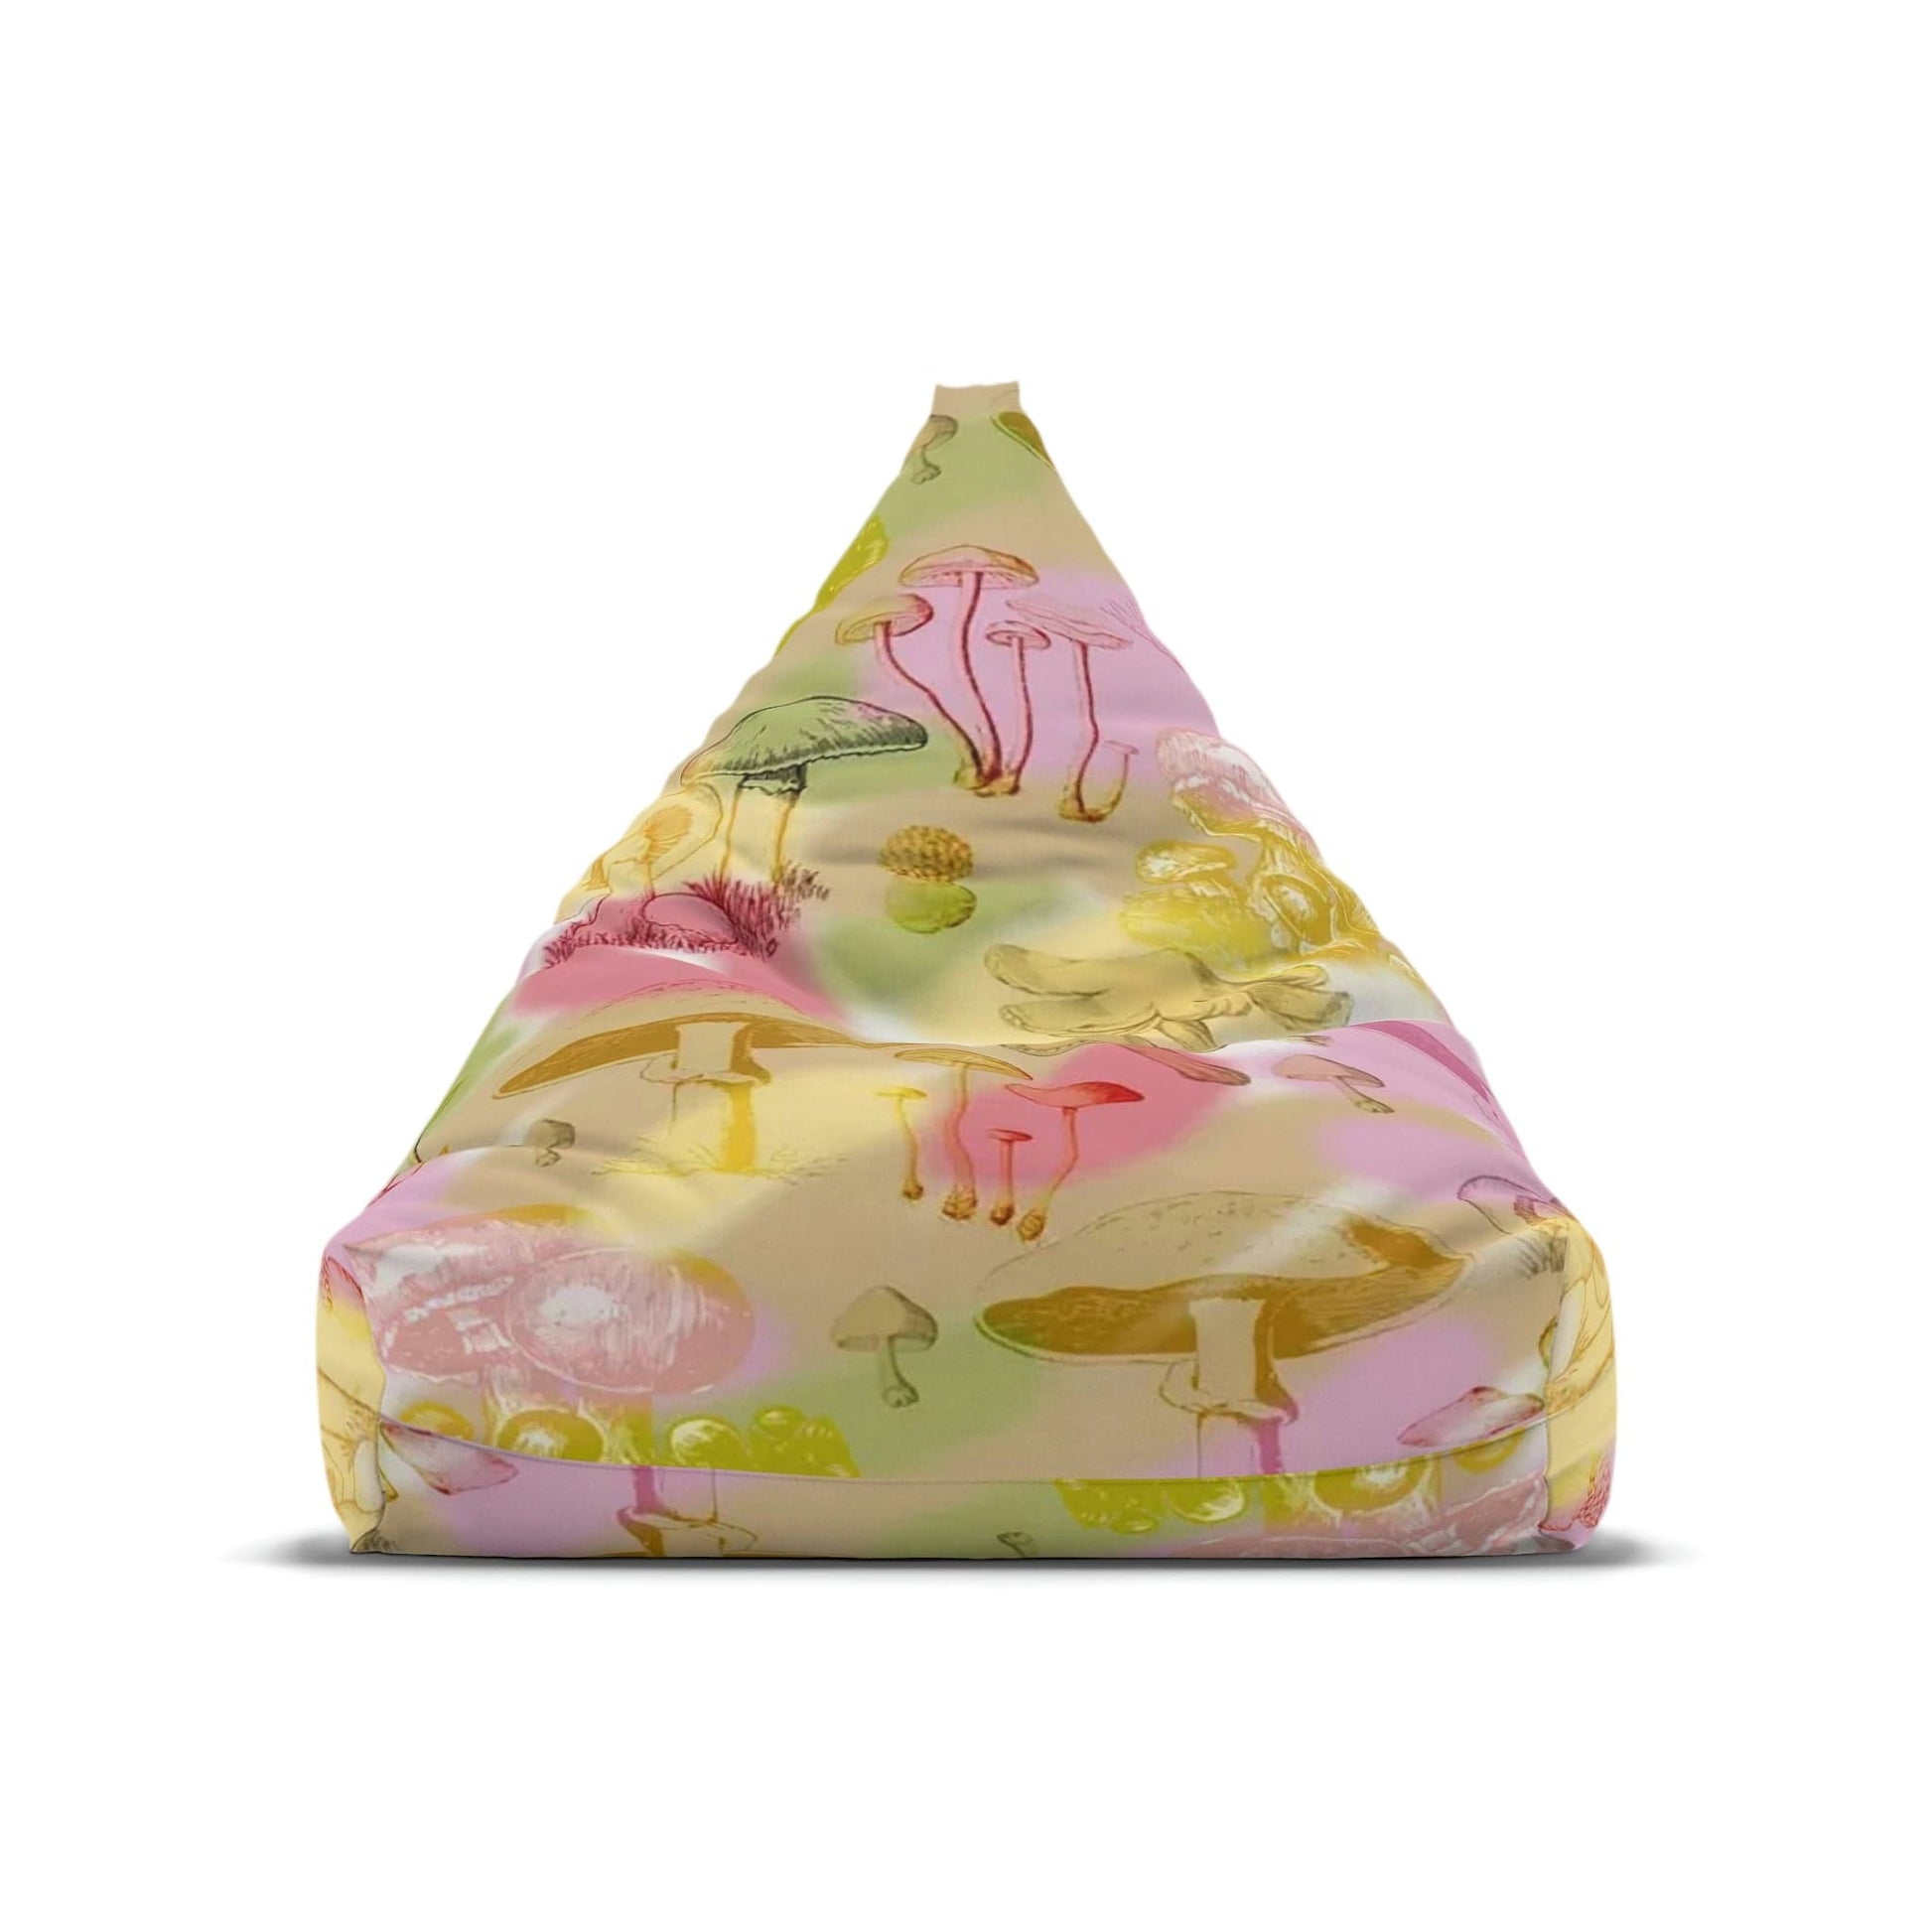 Kate McEnroe New York Mushroom in Pink and Yellow Bean Bag Chair Cover Bean Bag Chair Covers